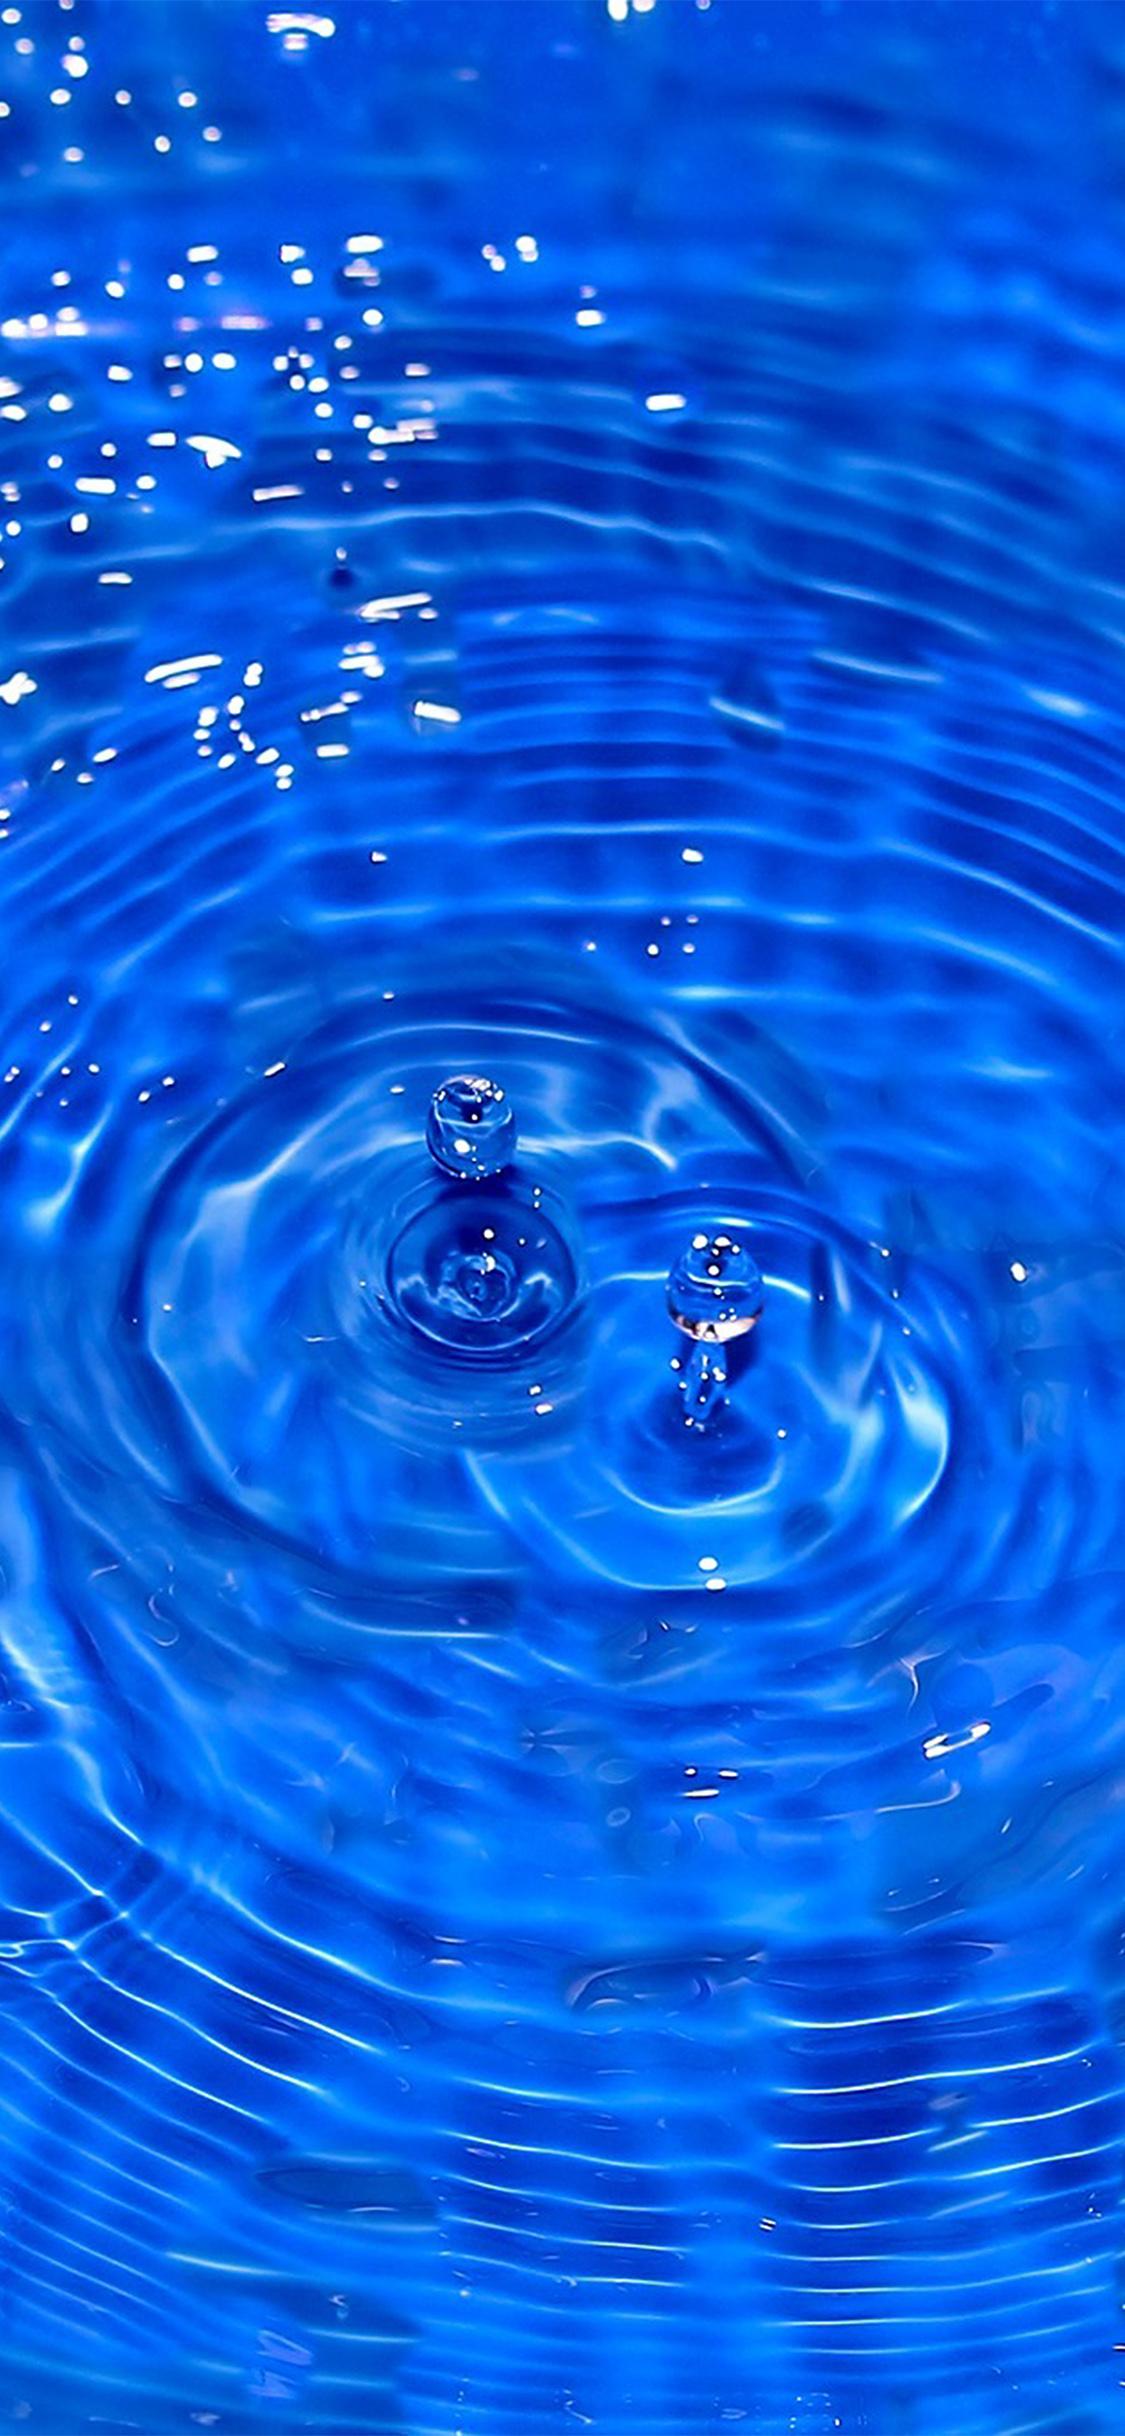 iPhone X wallpaper. water cool